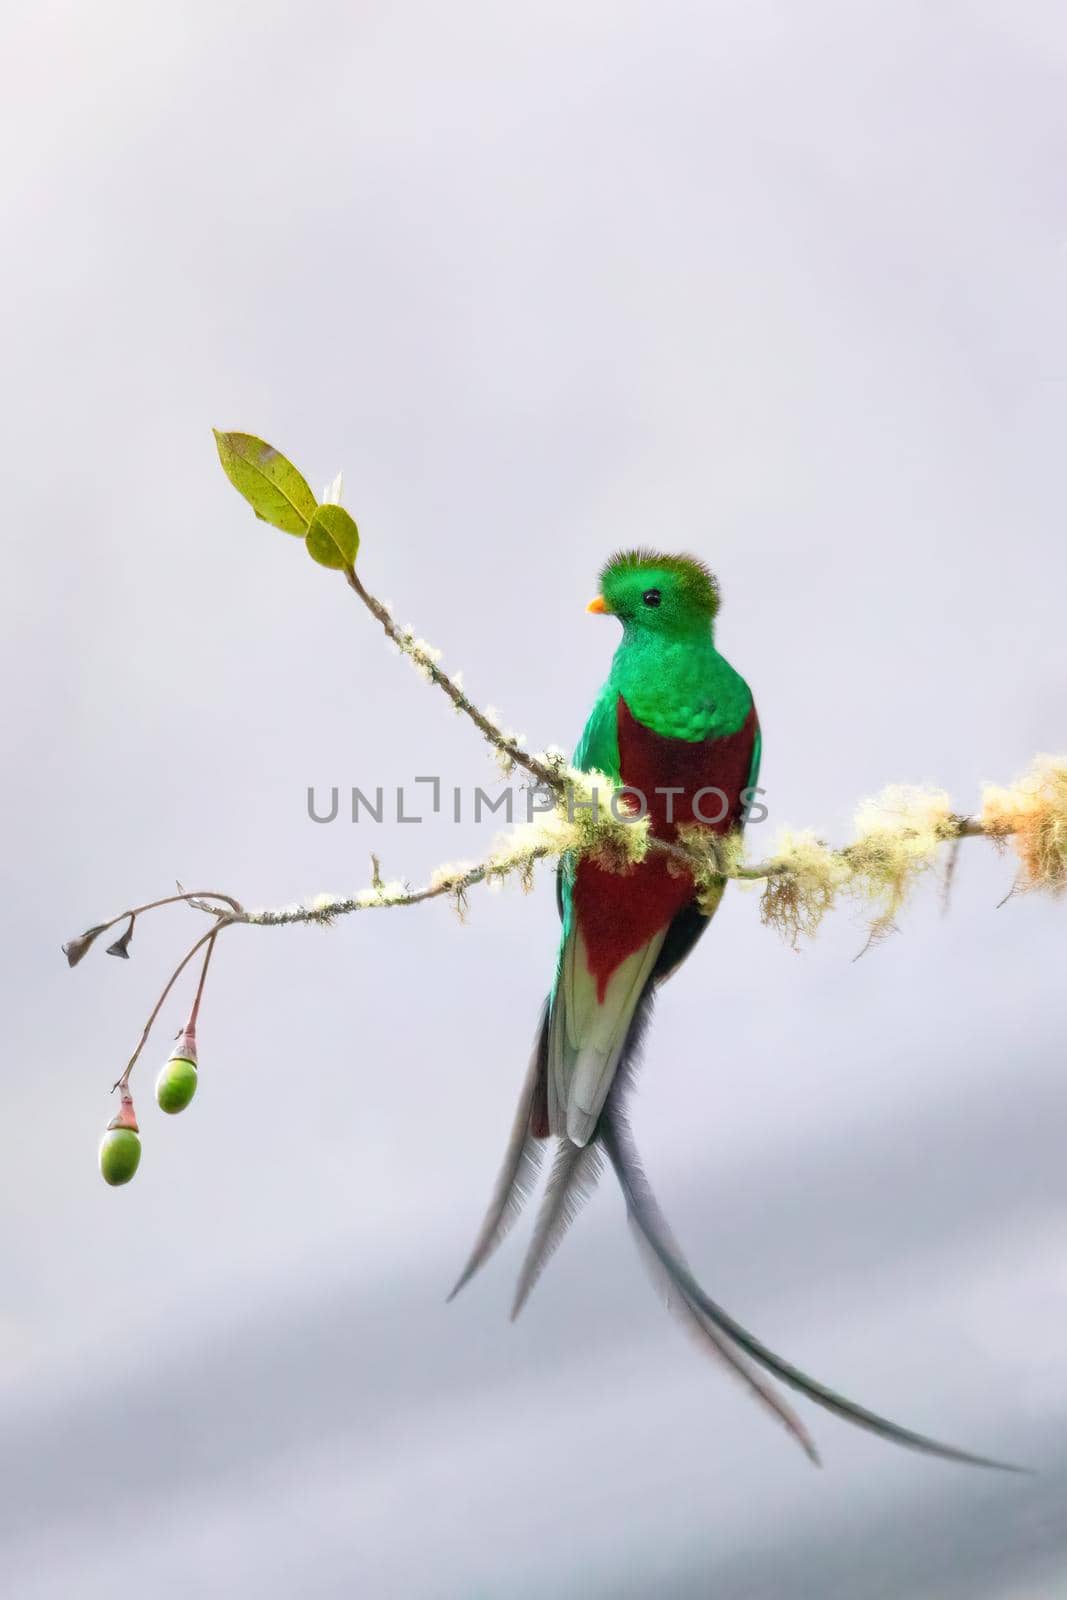 Resplendent quetzal (Pharomachrus mocinno), Guatemalan national bird. Magnificent sacred green and red iconic bird. Bird with long tail. San Gerardo de Dota, Wildlife and birdwatching in Costa Rica.